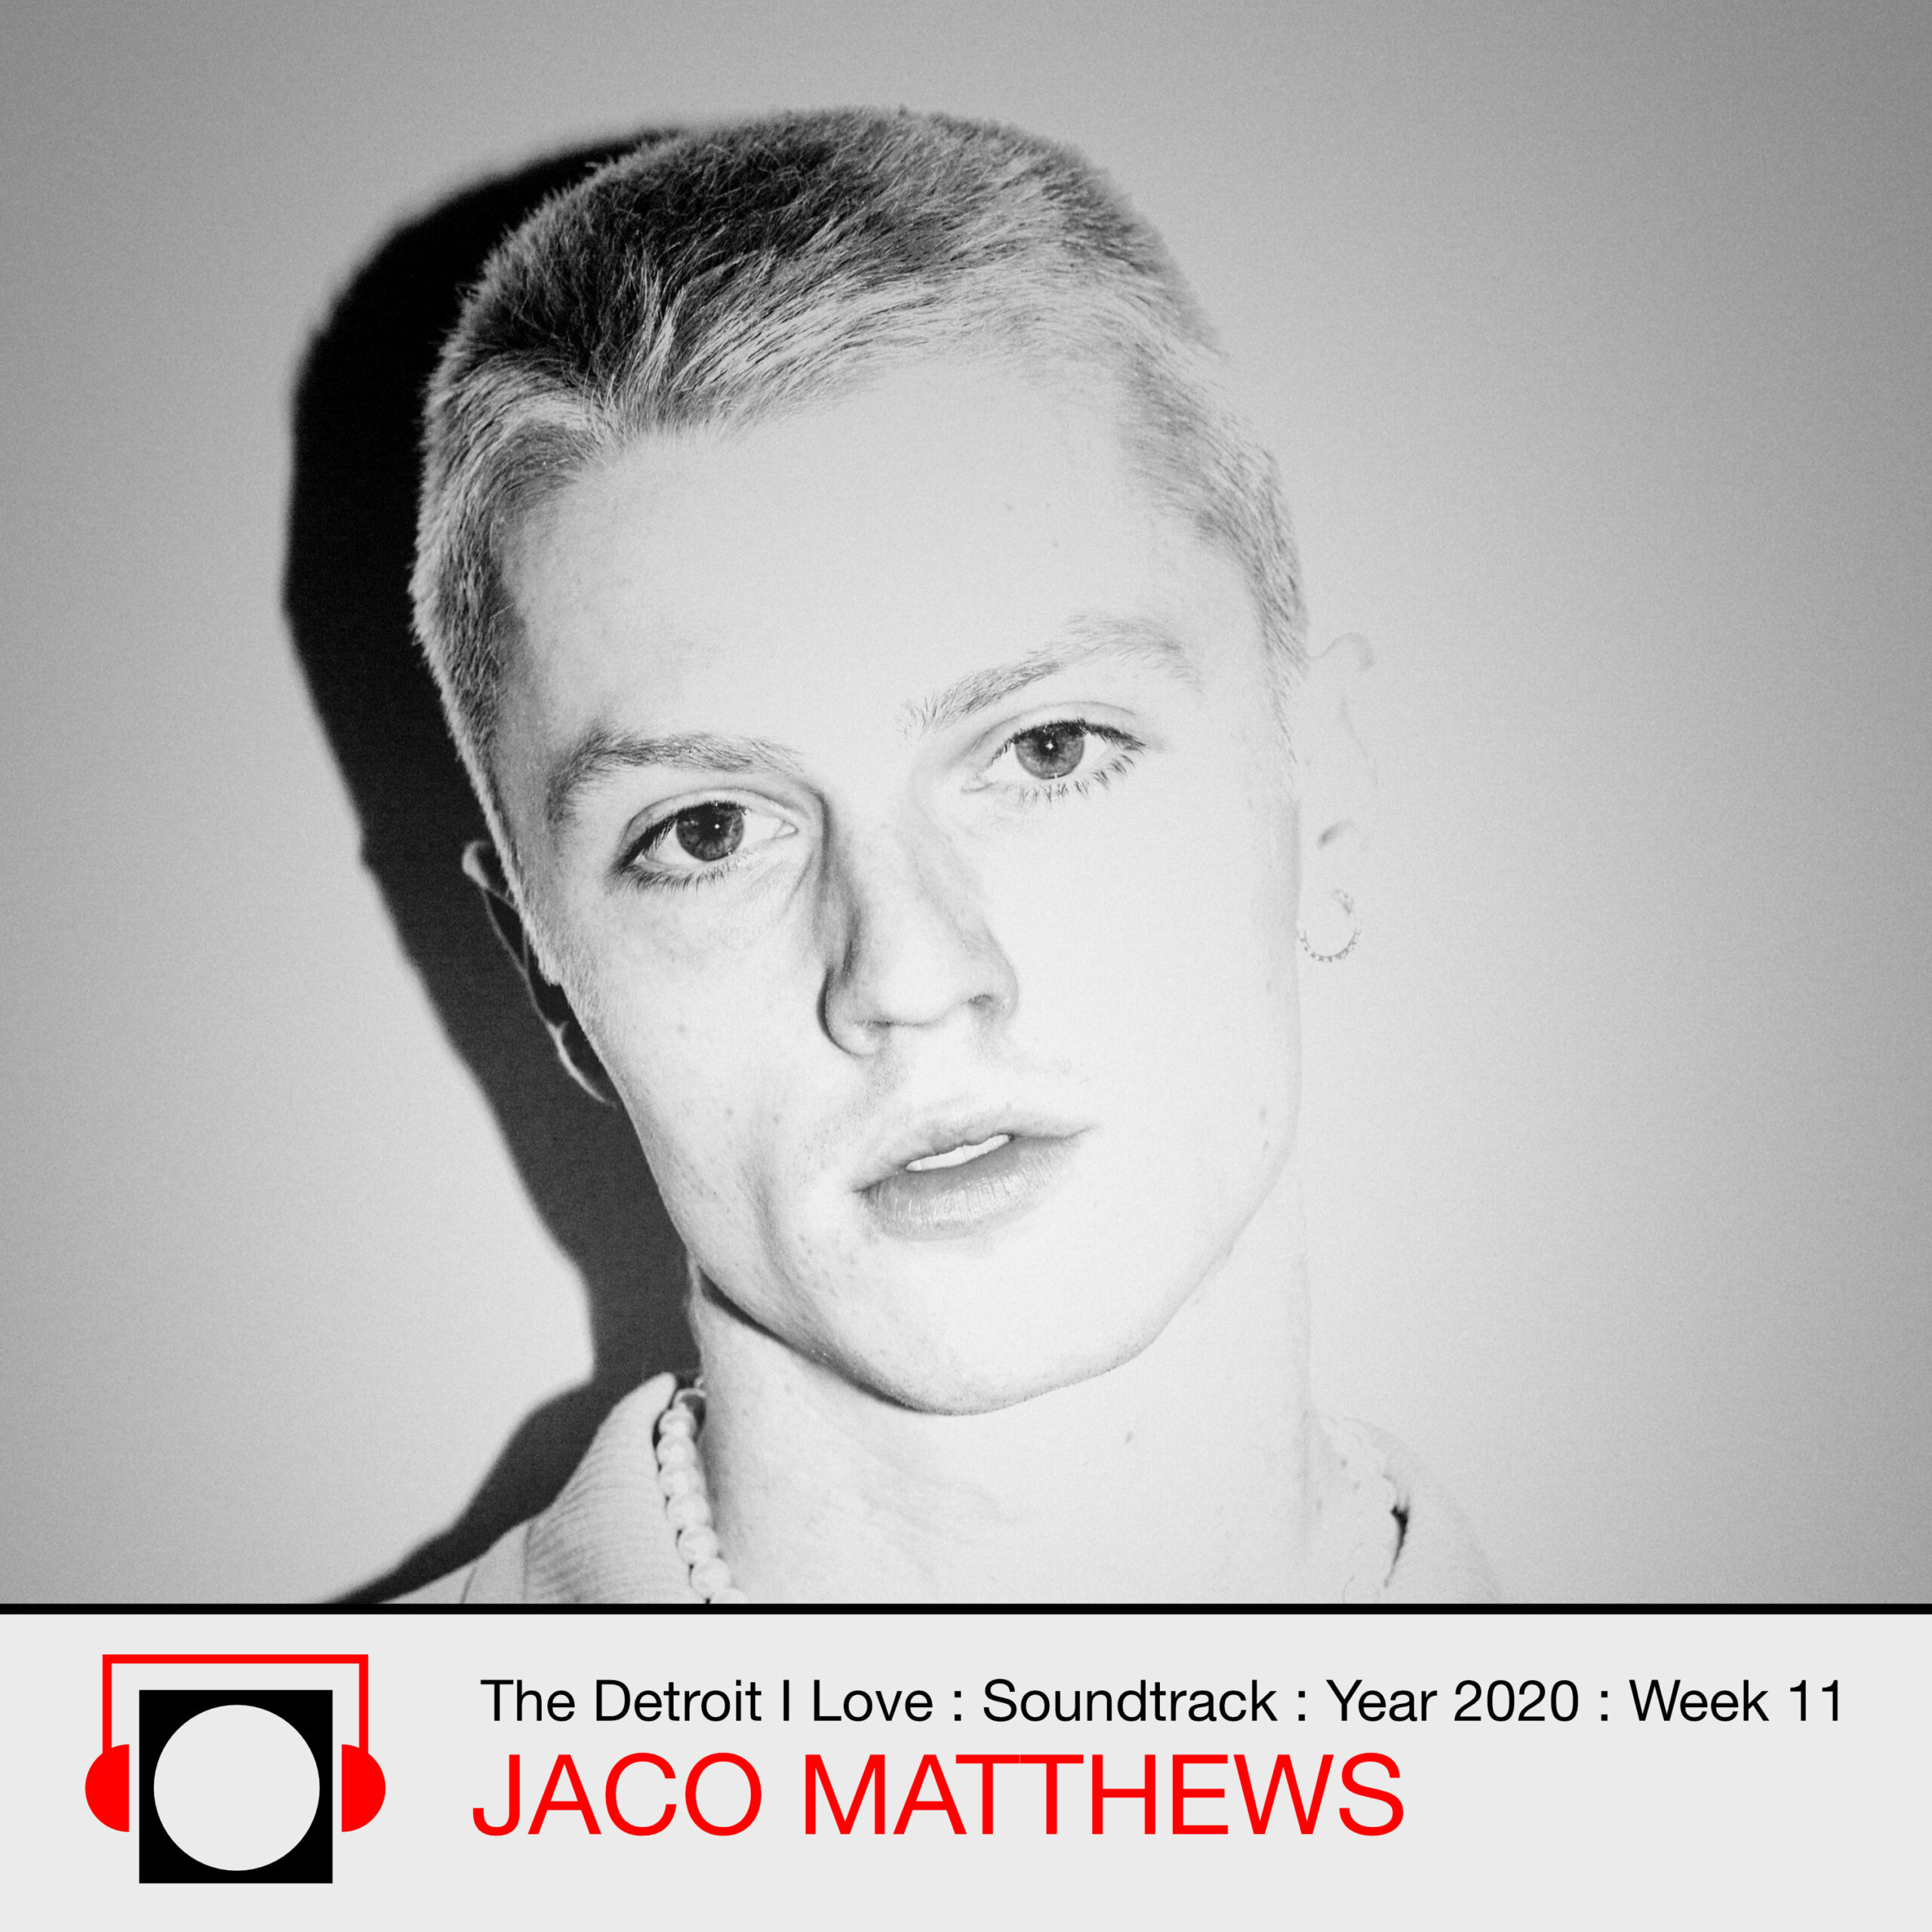 Jaco Matthews